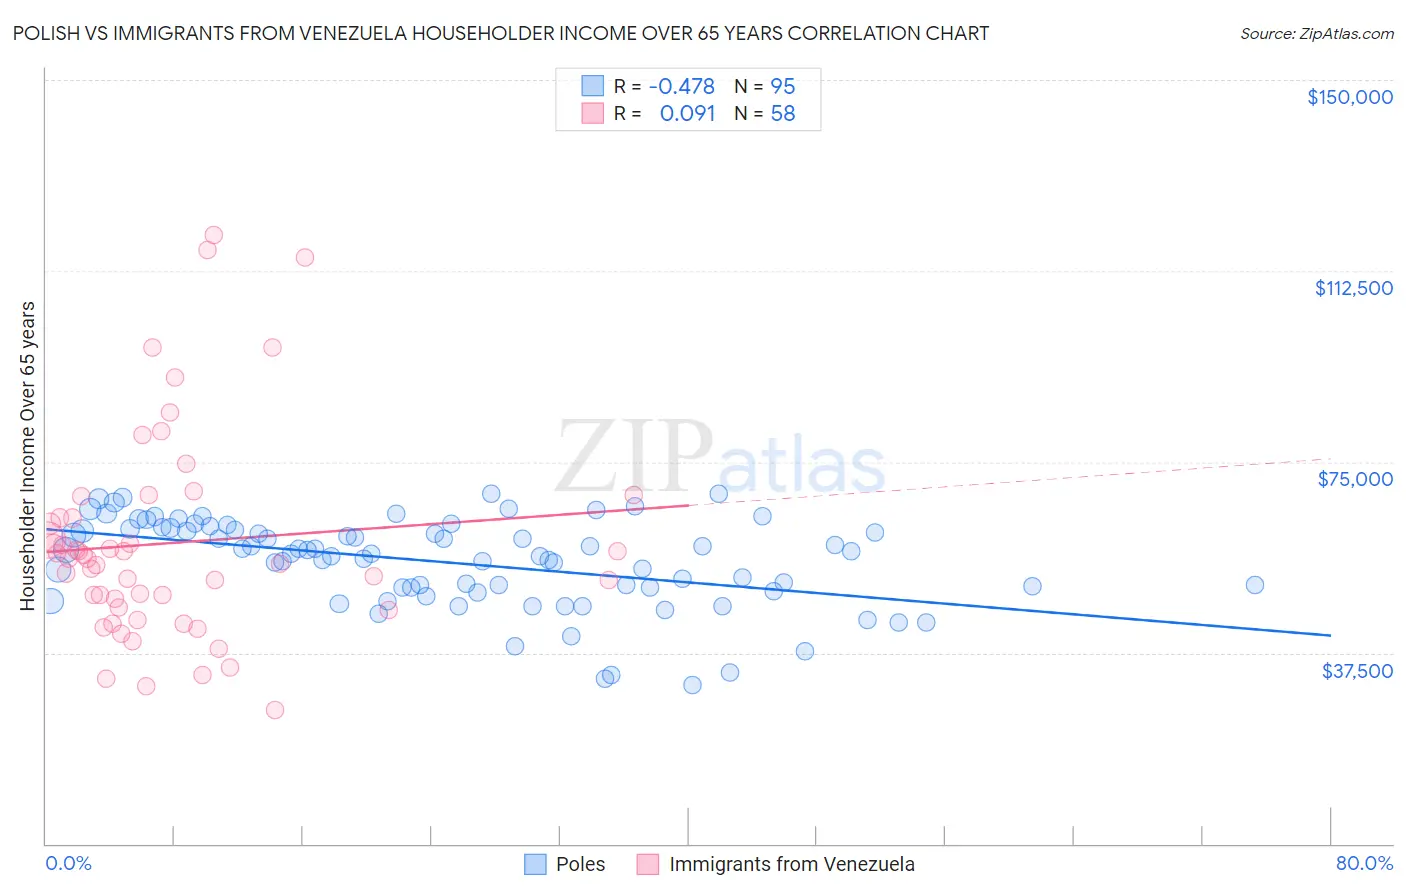 Polish vs Immigrants from Venezuela Householder Income Over 65 years